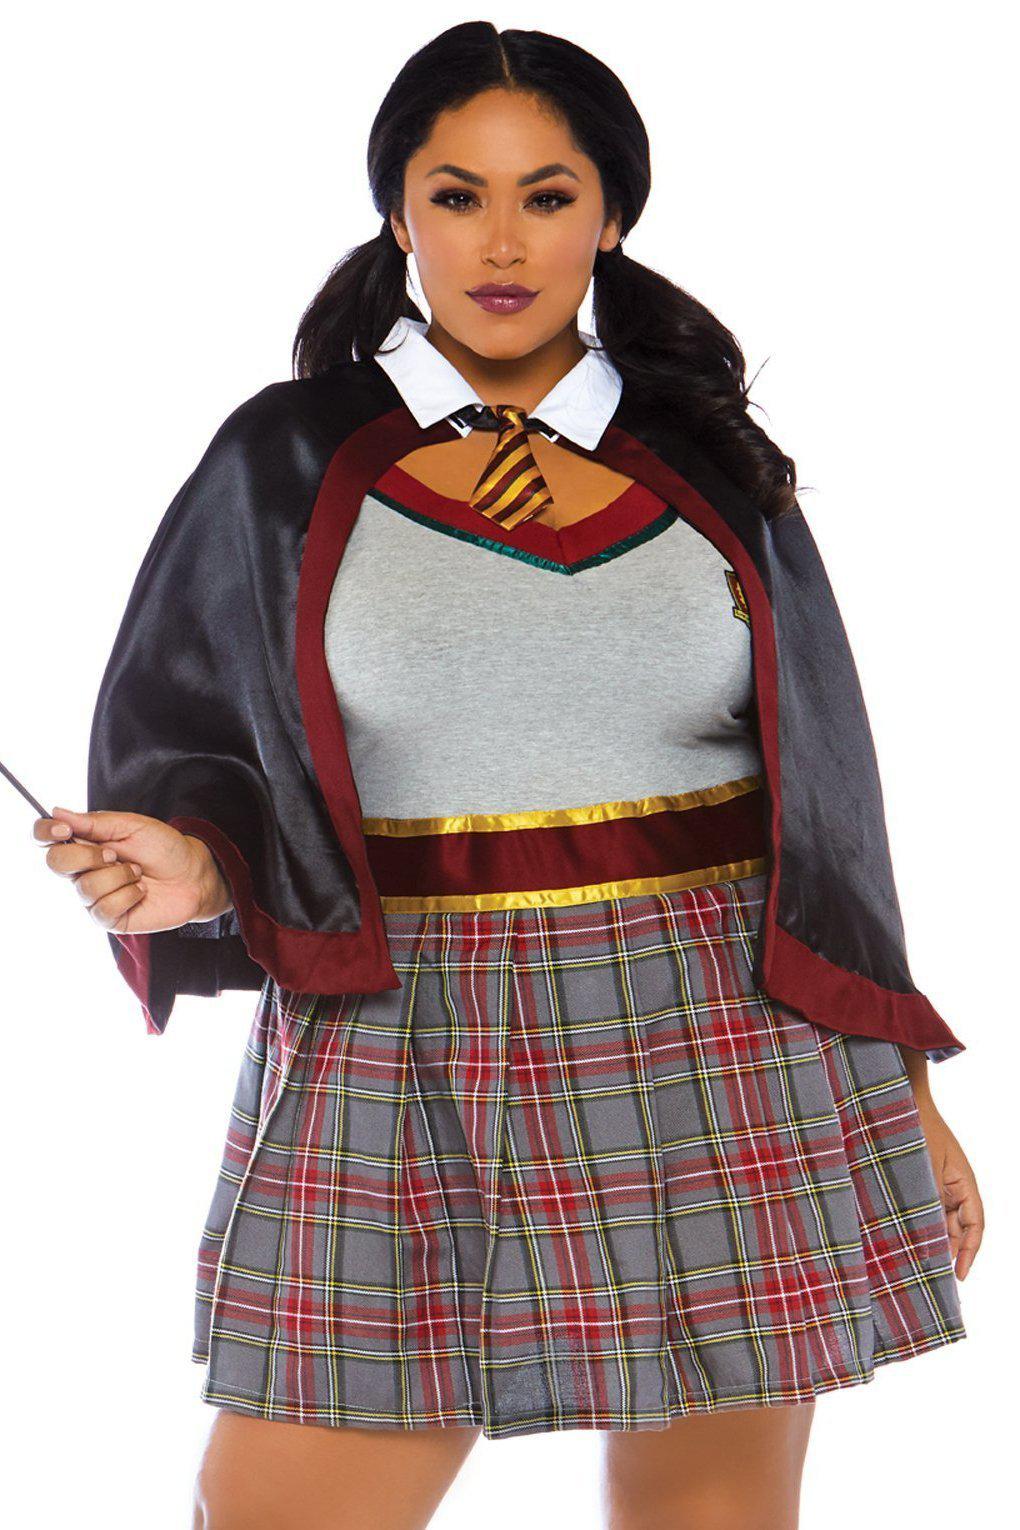 Plus Size Spellbinding School Girl Costume-School Girl Costumes-Leg Avenue-Multi-1/2XL-SEXYSHOES.COM